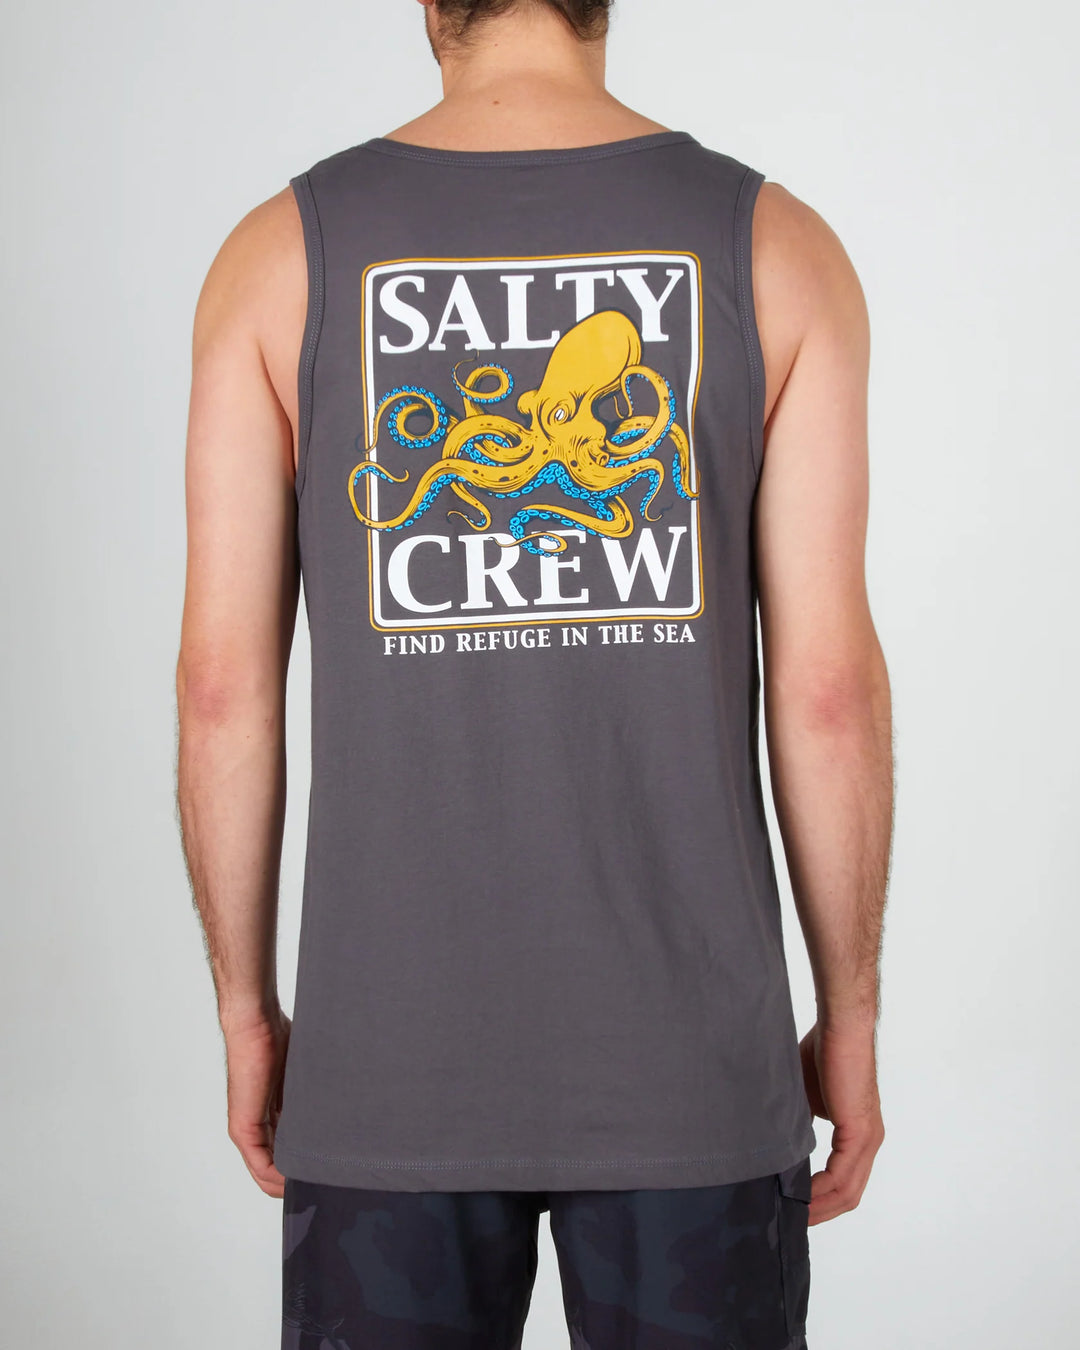 Salty Crew Surf Club Black Tank - CHARCOAL - Sun Diego Boardshop